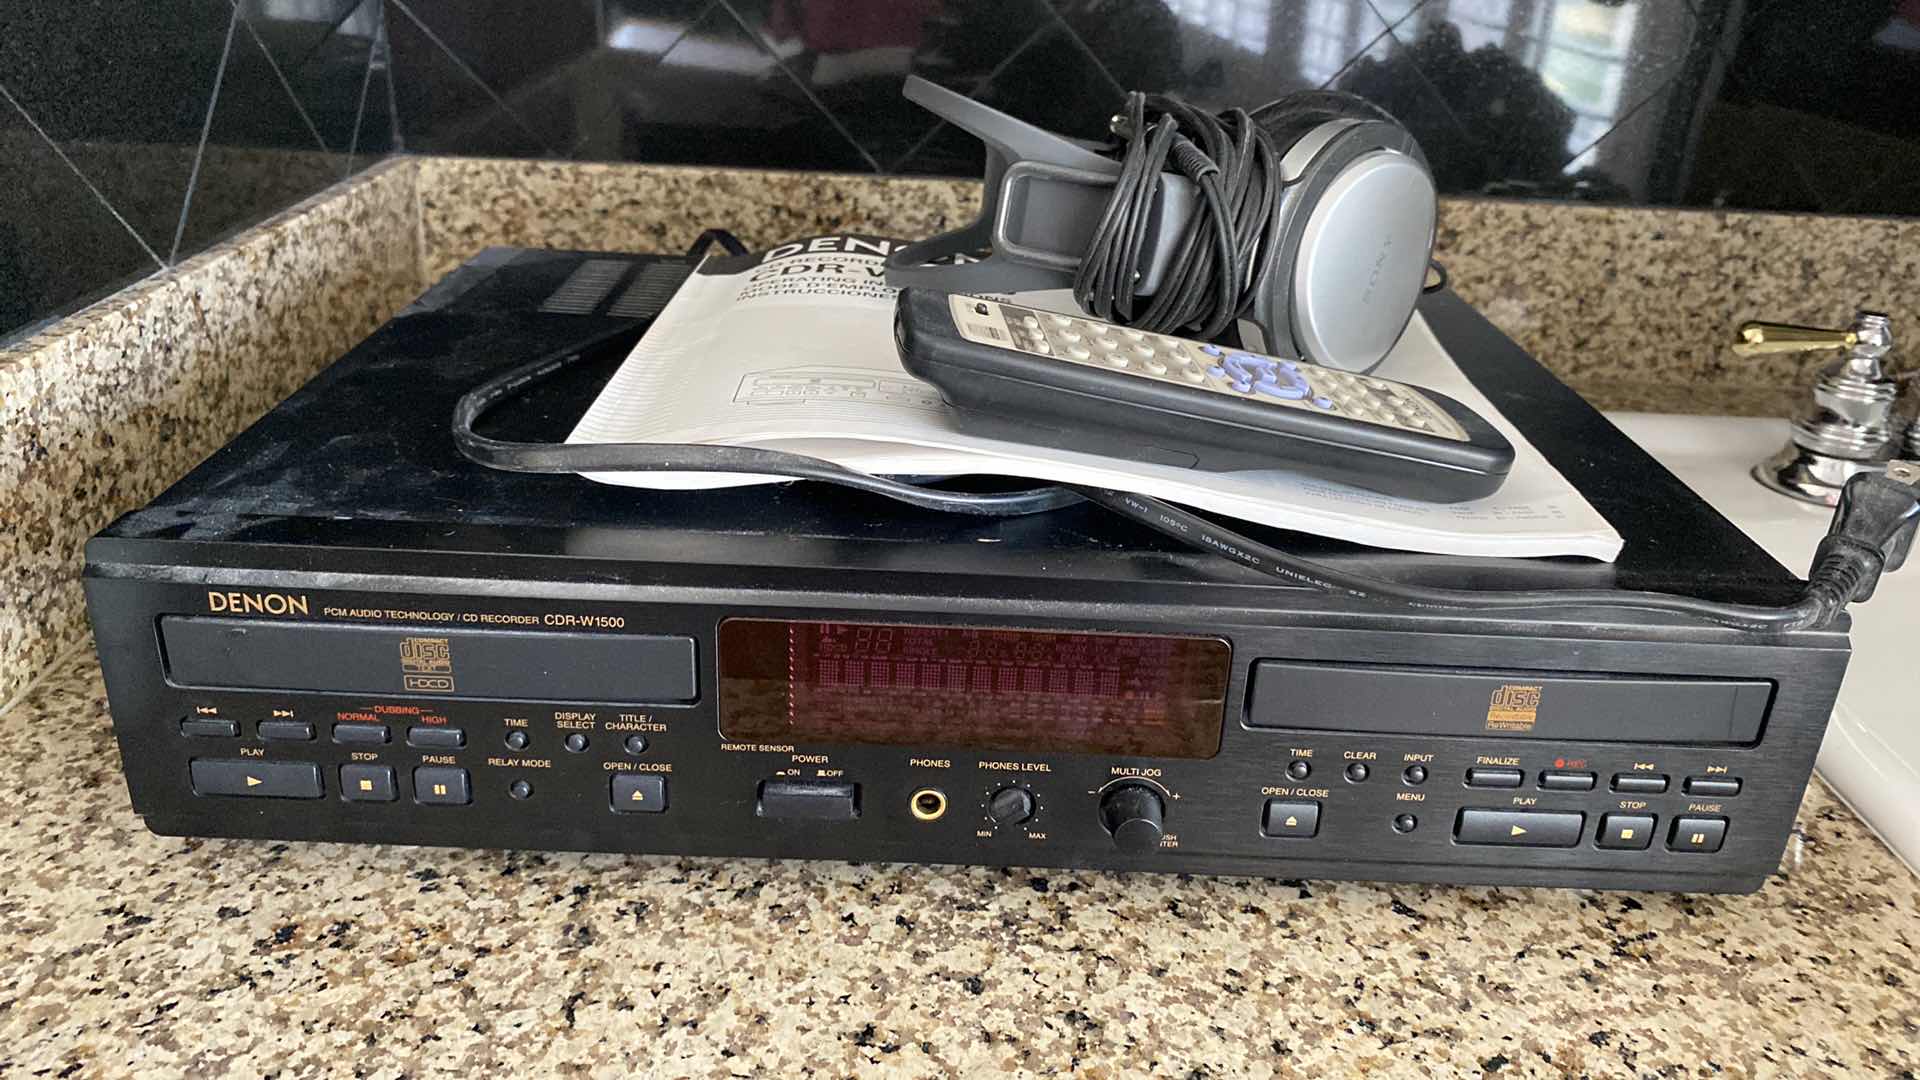 Photo 1 of DENON CDV RECORDER CDR-W1500 WITH SONY HEADPHONES